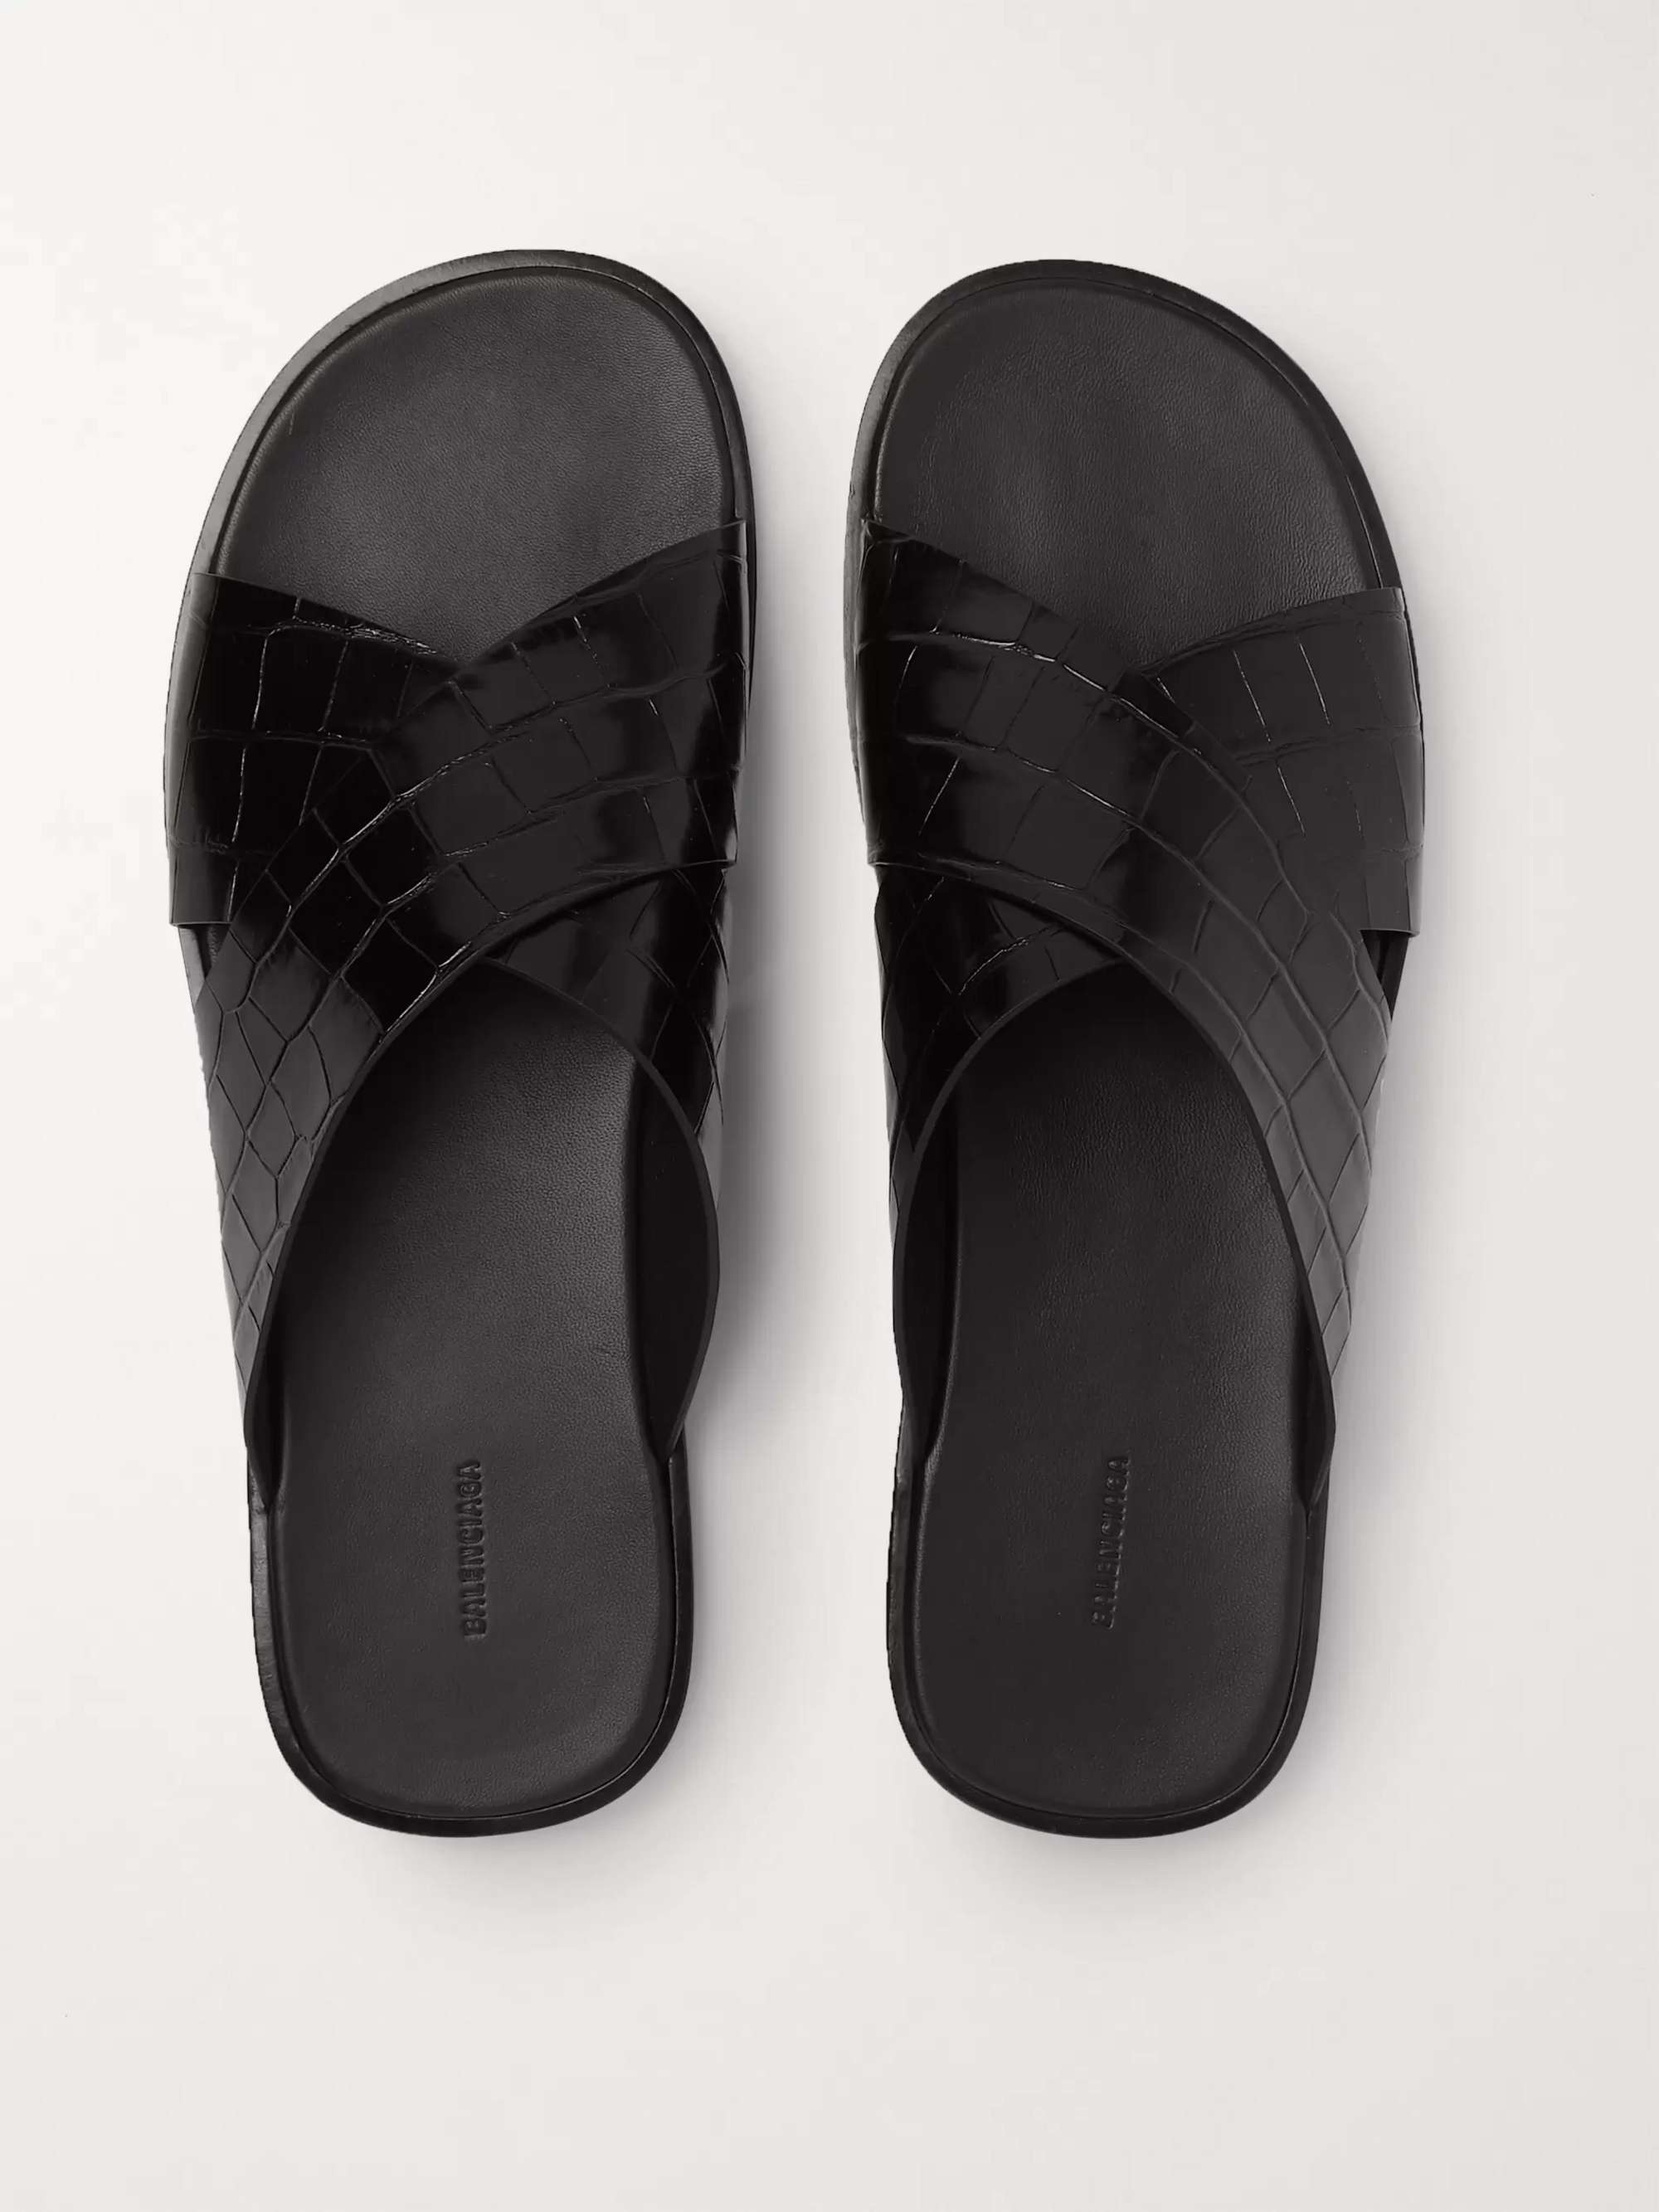 BALENCIAGA Logo-Print Croc-Effect Leather Slides